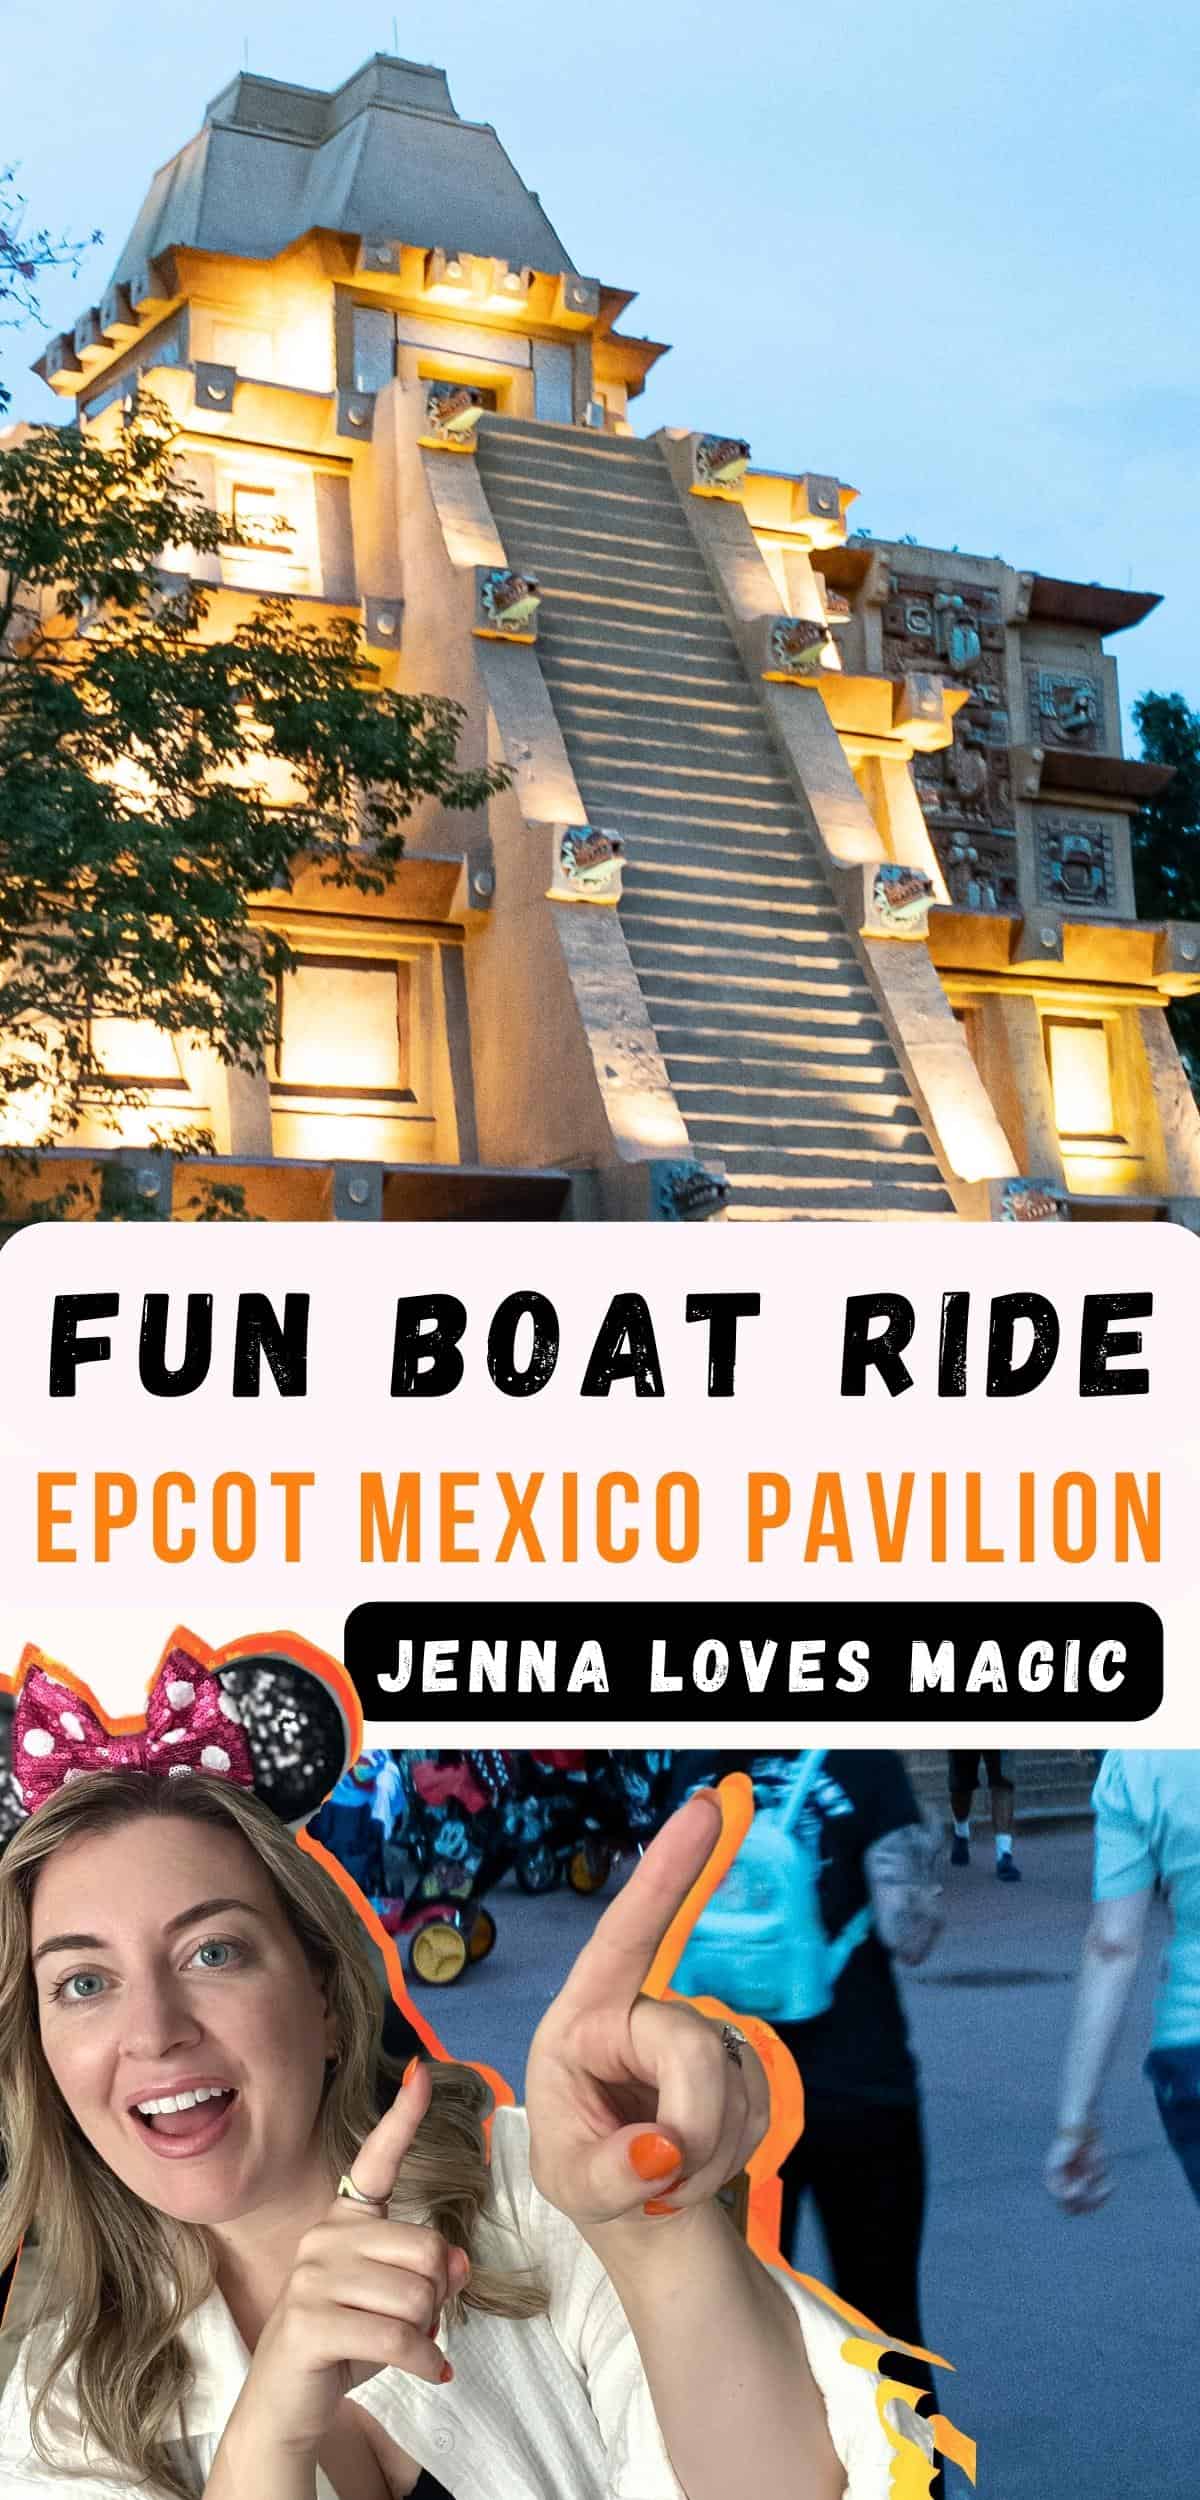 Disney World Epcot Boat Ride in Mexico Pavilion with Jenna Loves Magic logo